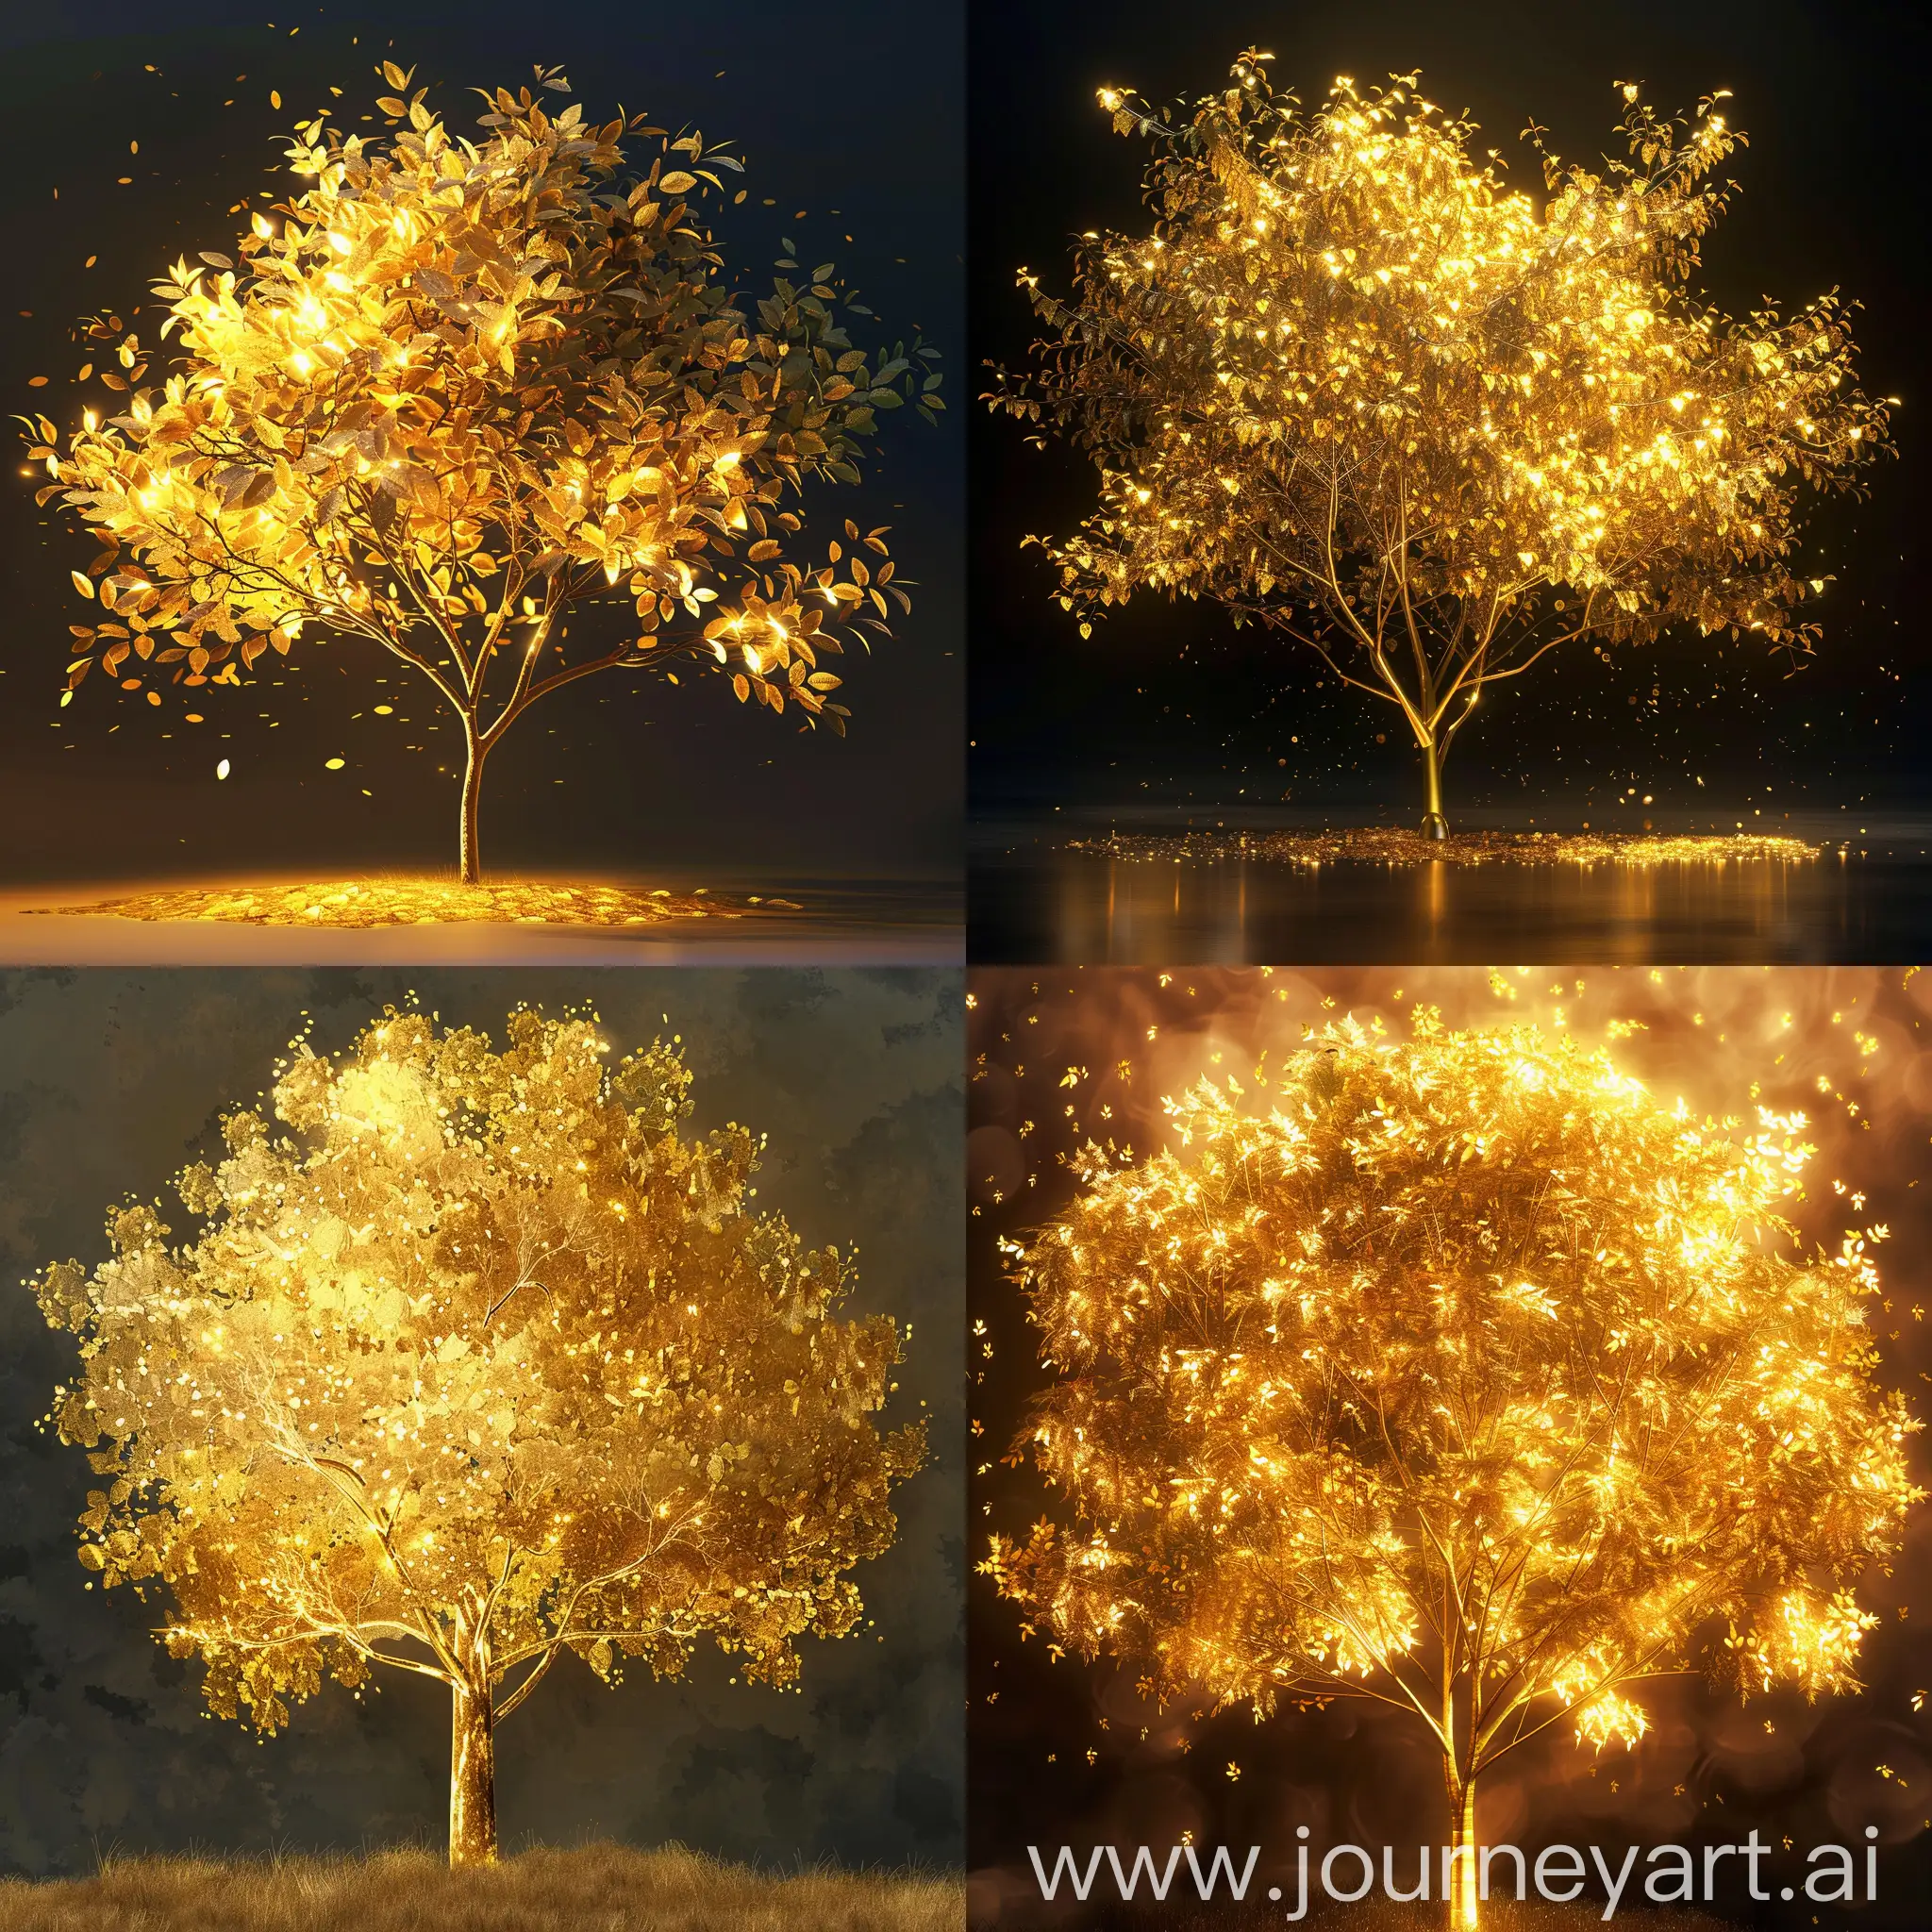 Golden-Tree-Bathed-in-Radiant-Light